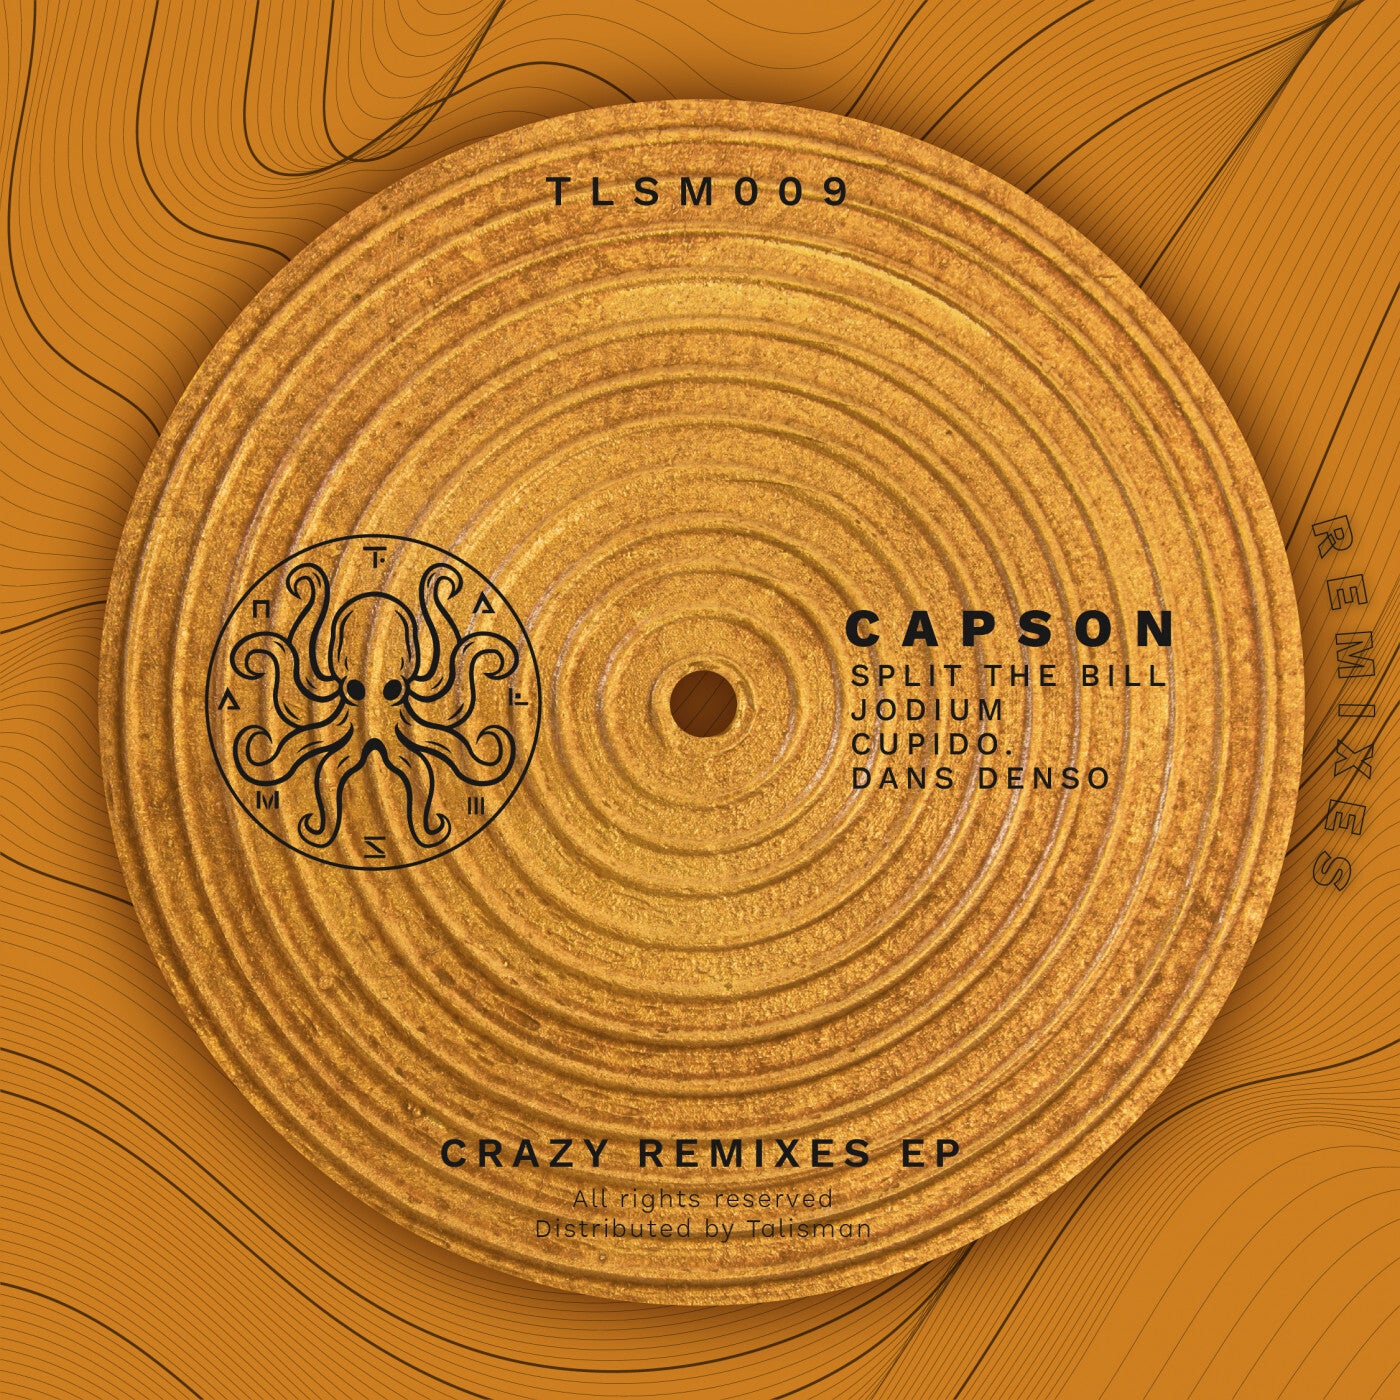 CAPSON – Crazy Remixes EP [TLSM009]